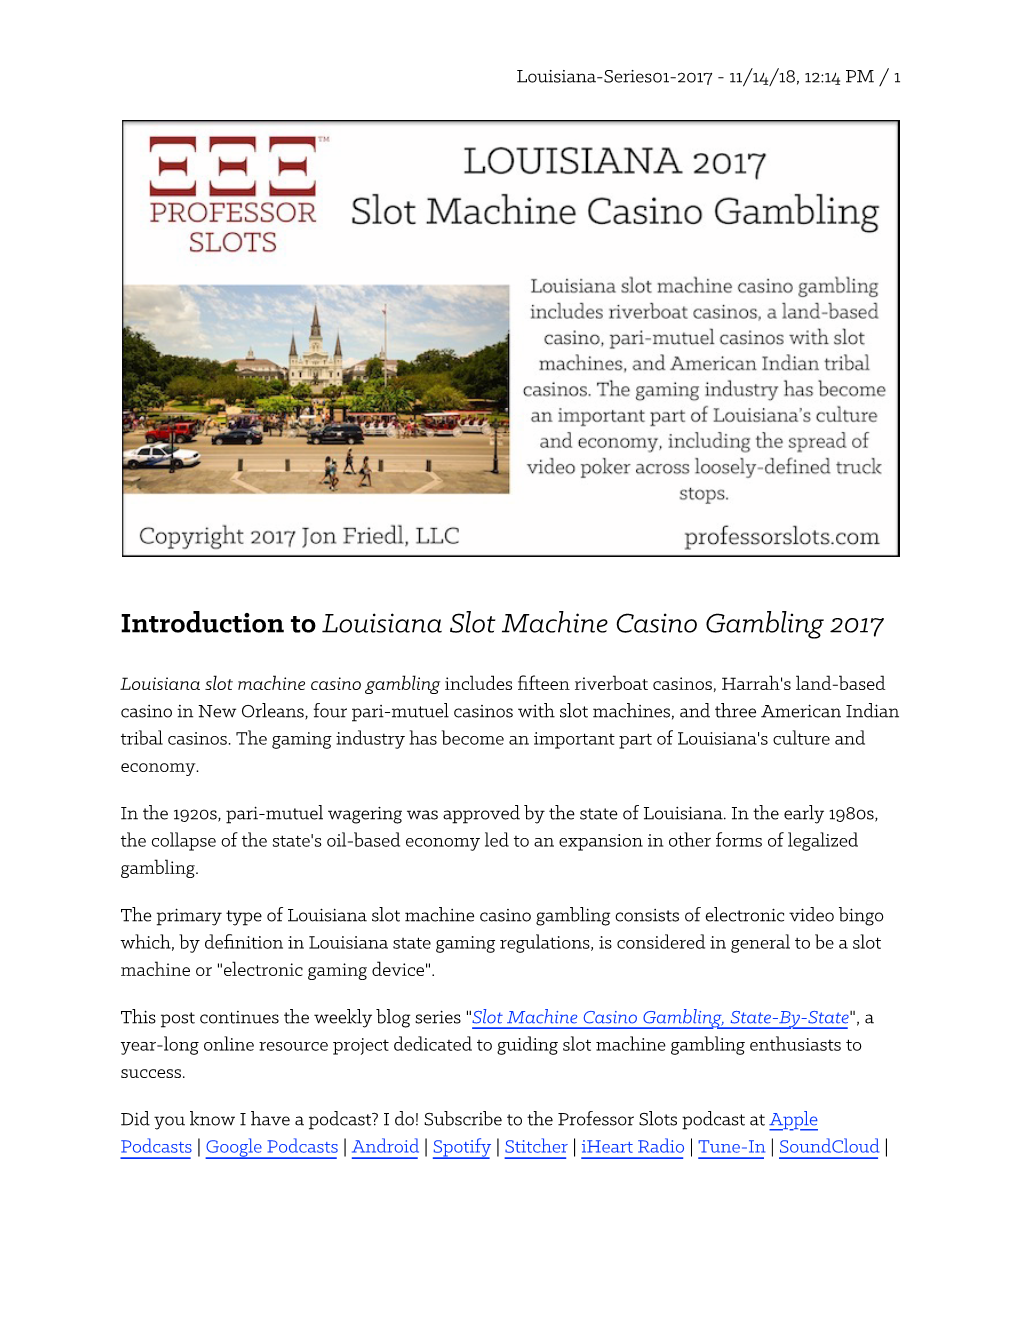 Introduction to Louisiana Slot Machine Casino Gambling 2017